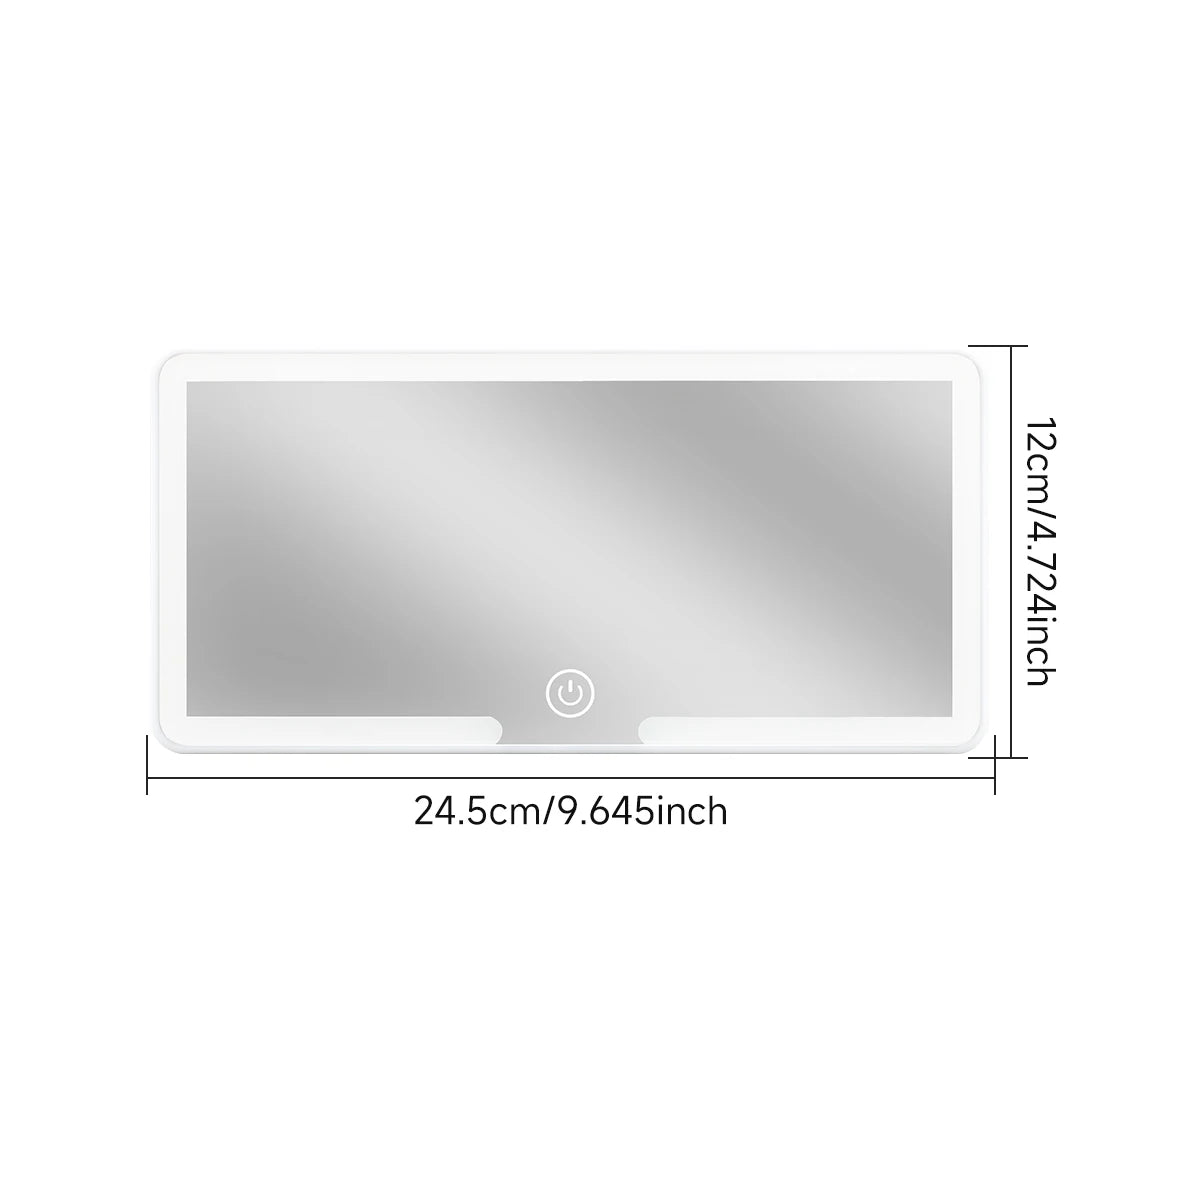 HD LED Car Vanity Mirror: Adjustable Sun Visor Makeup Mirror